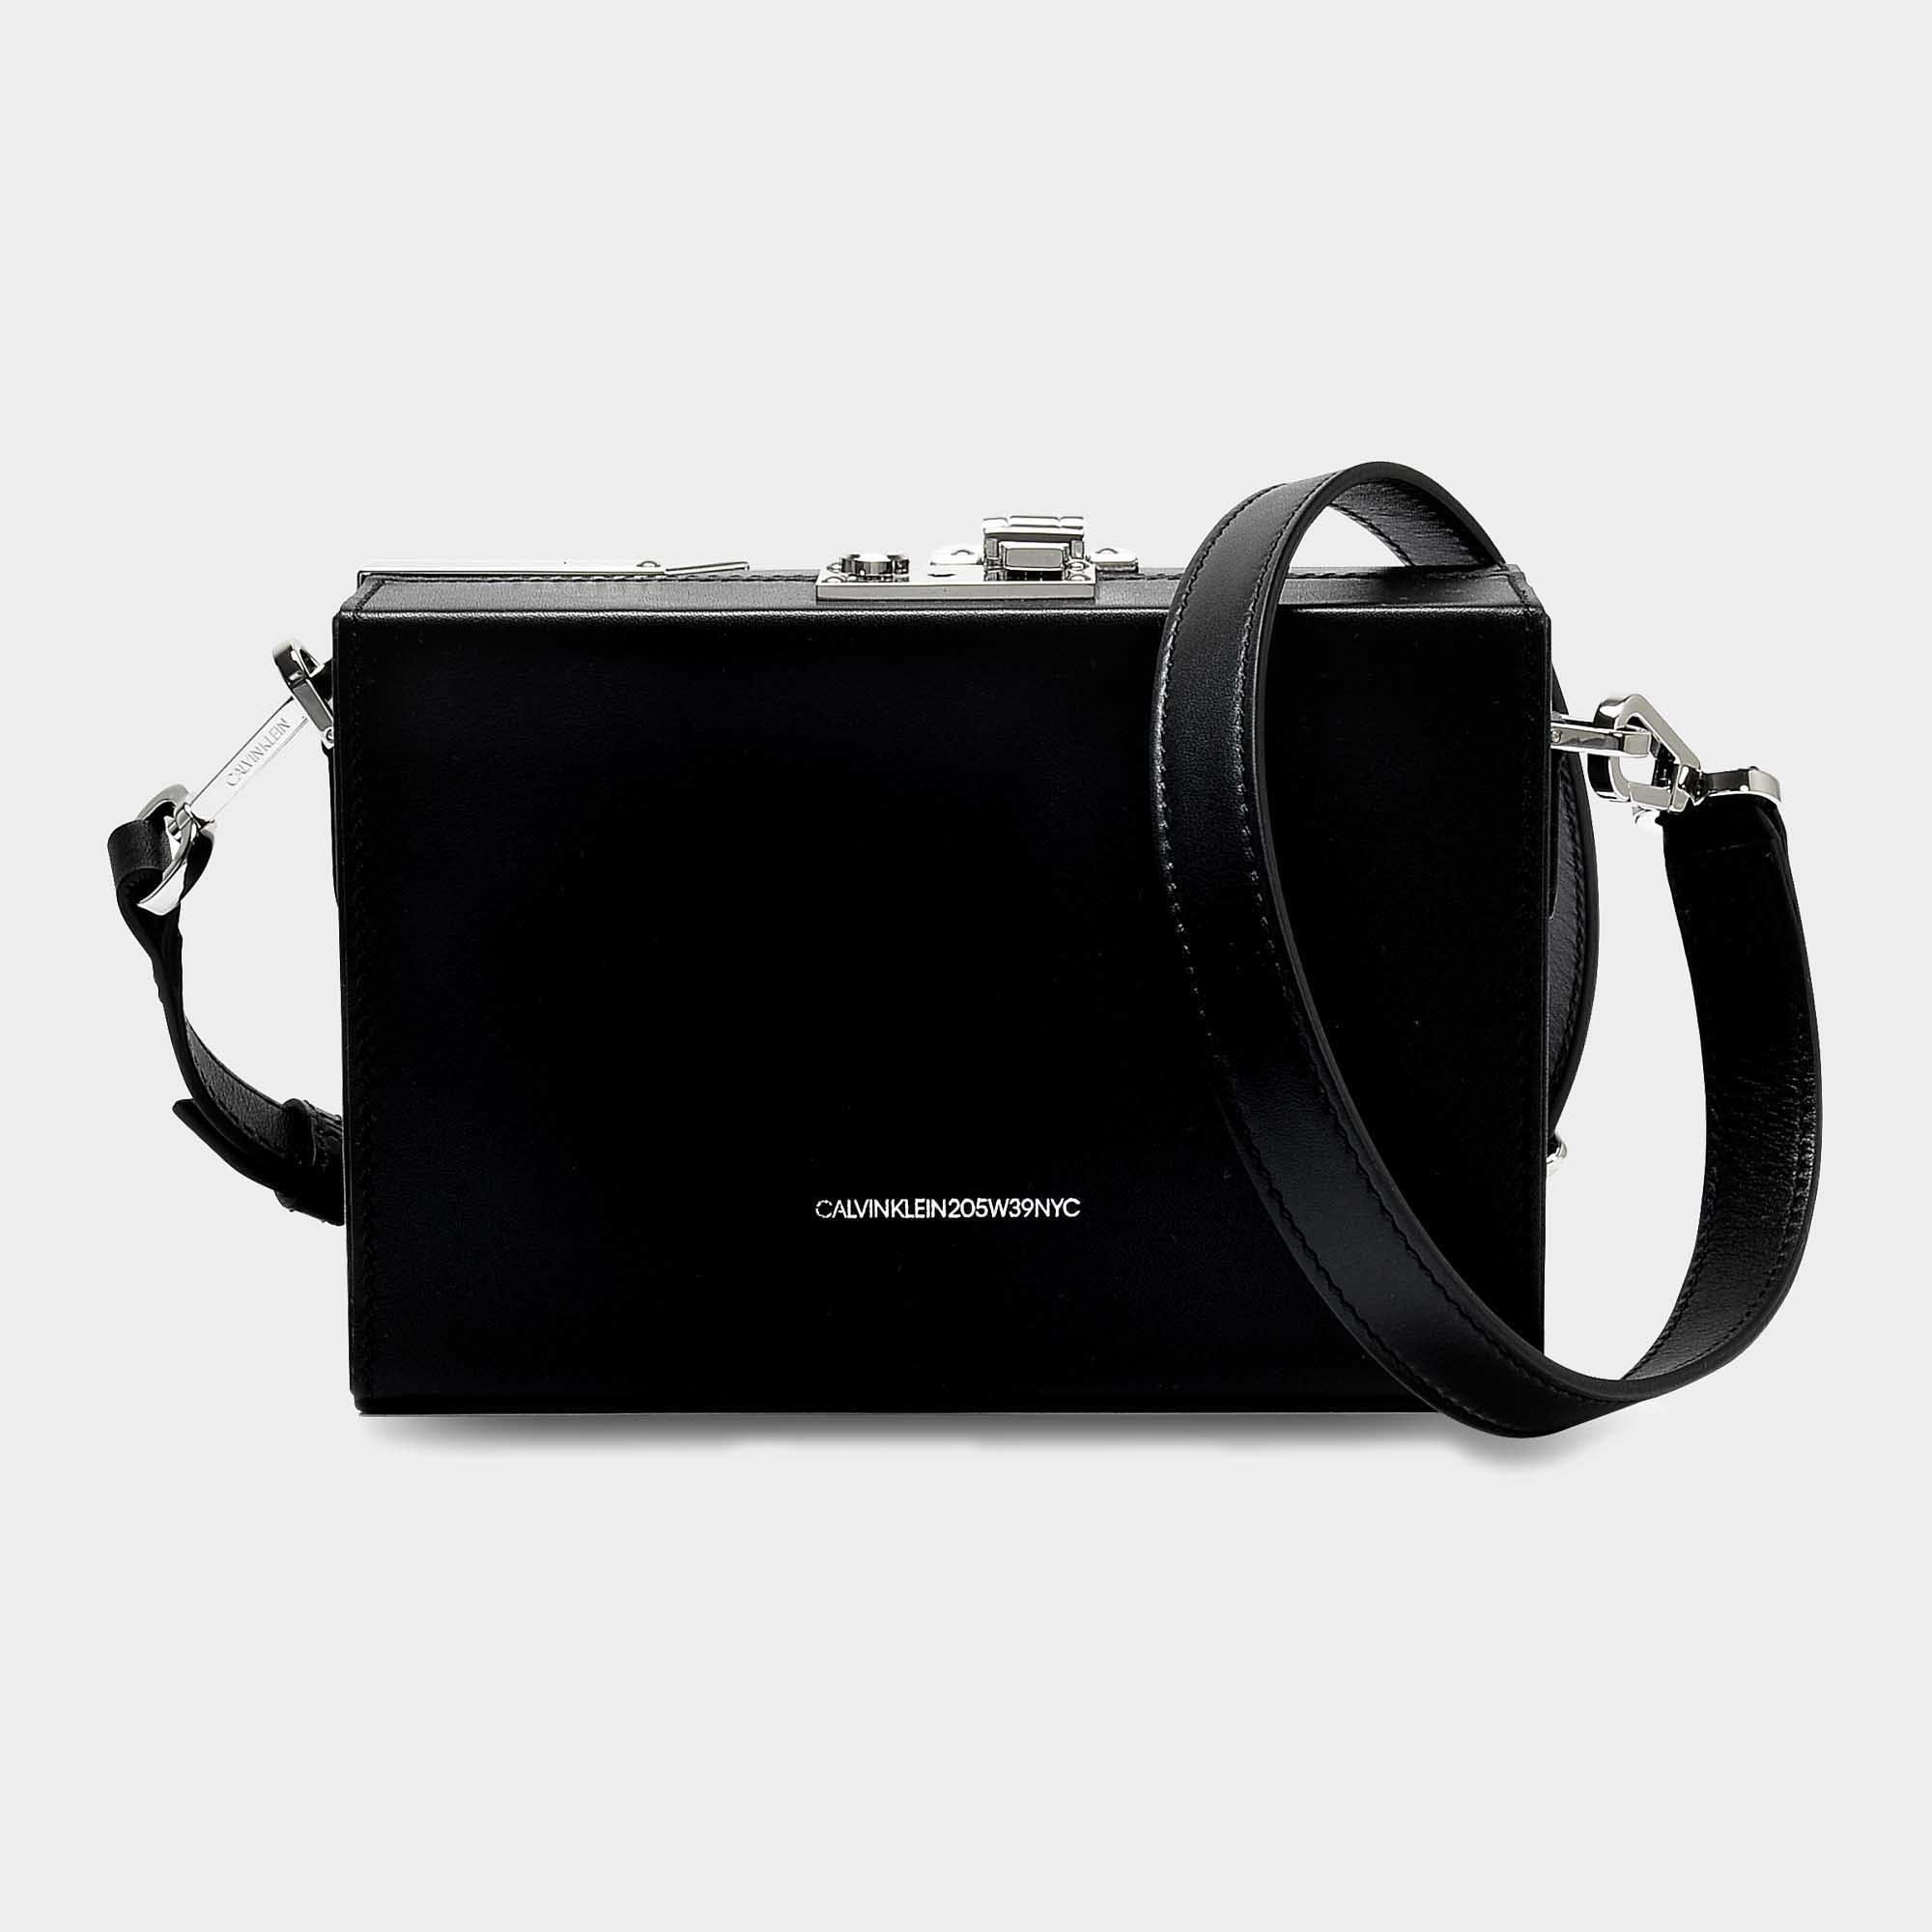 CALVIN KLEIN 205W39NYC Mini Box Shoulder Bag in Black - Lyst